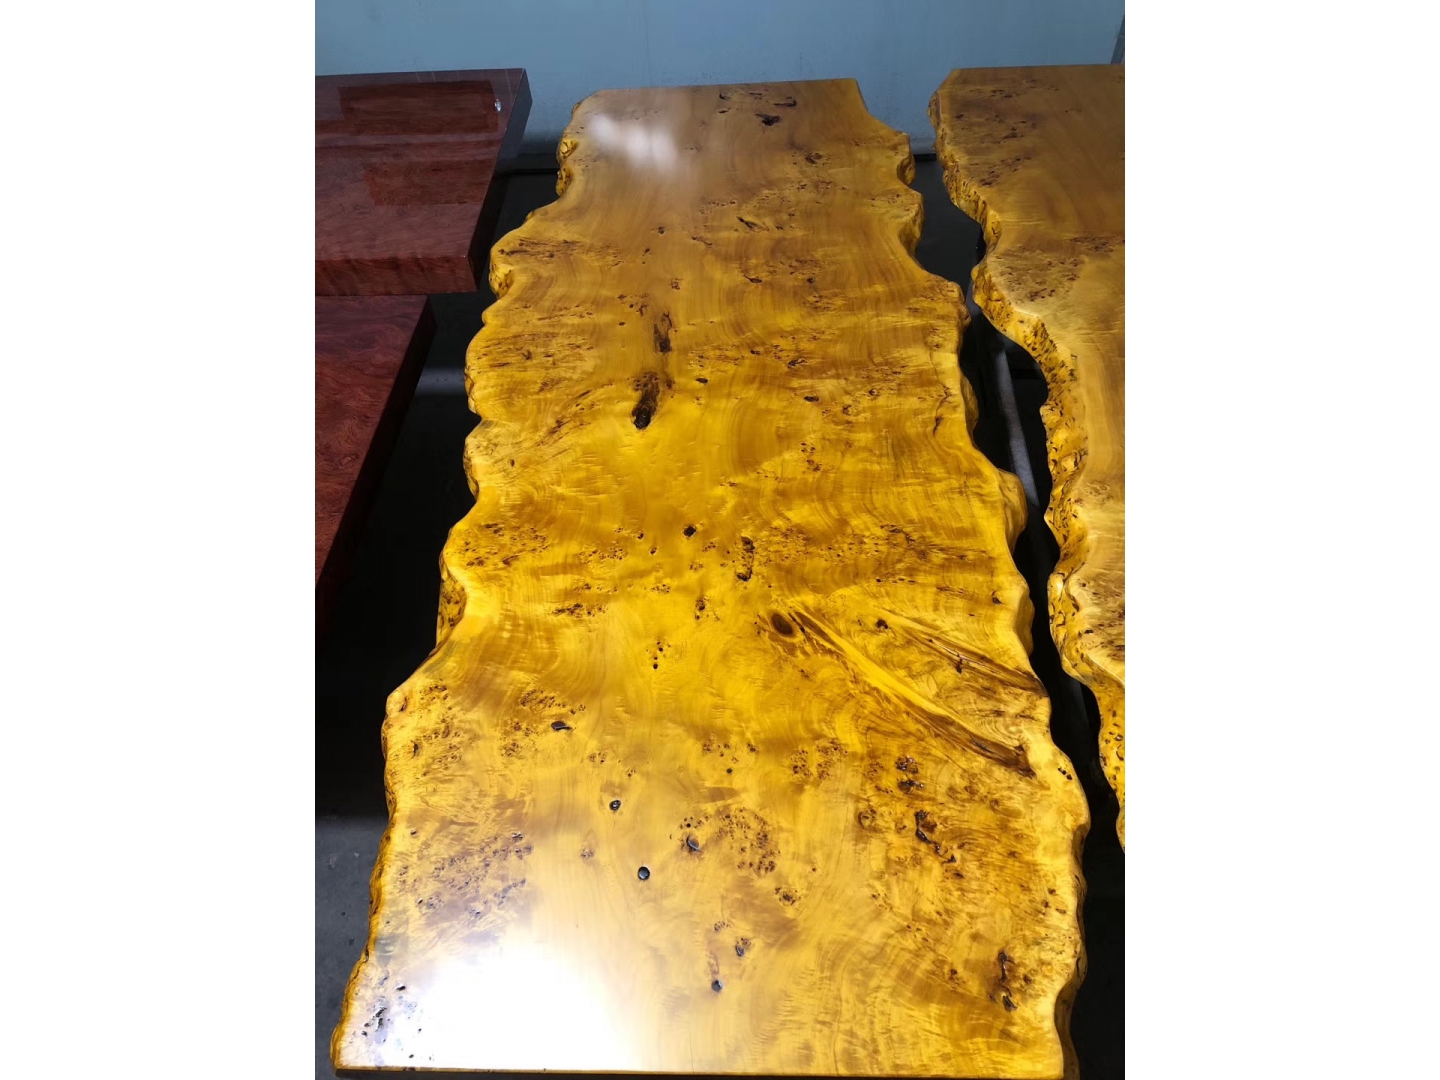 Germany poplar burl slab wood table top